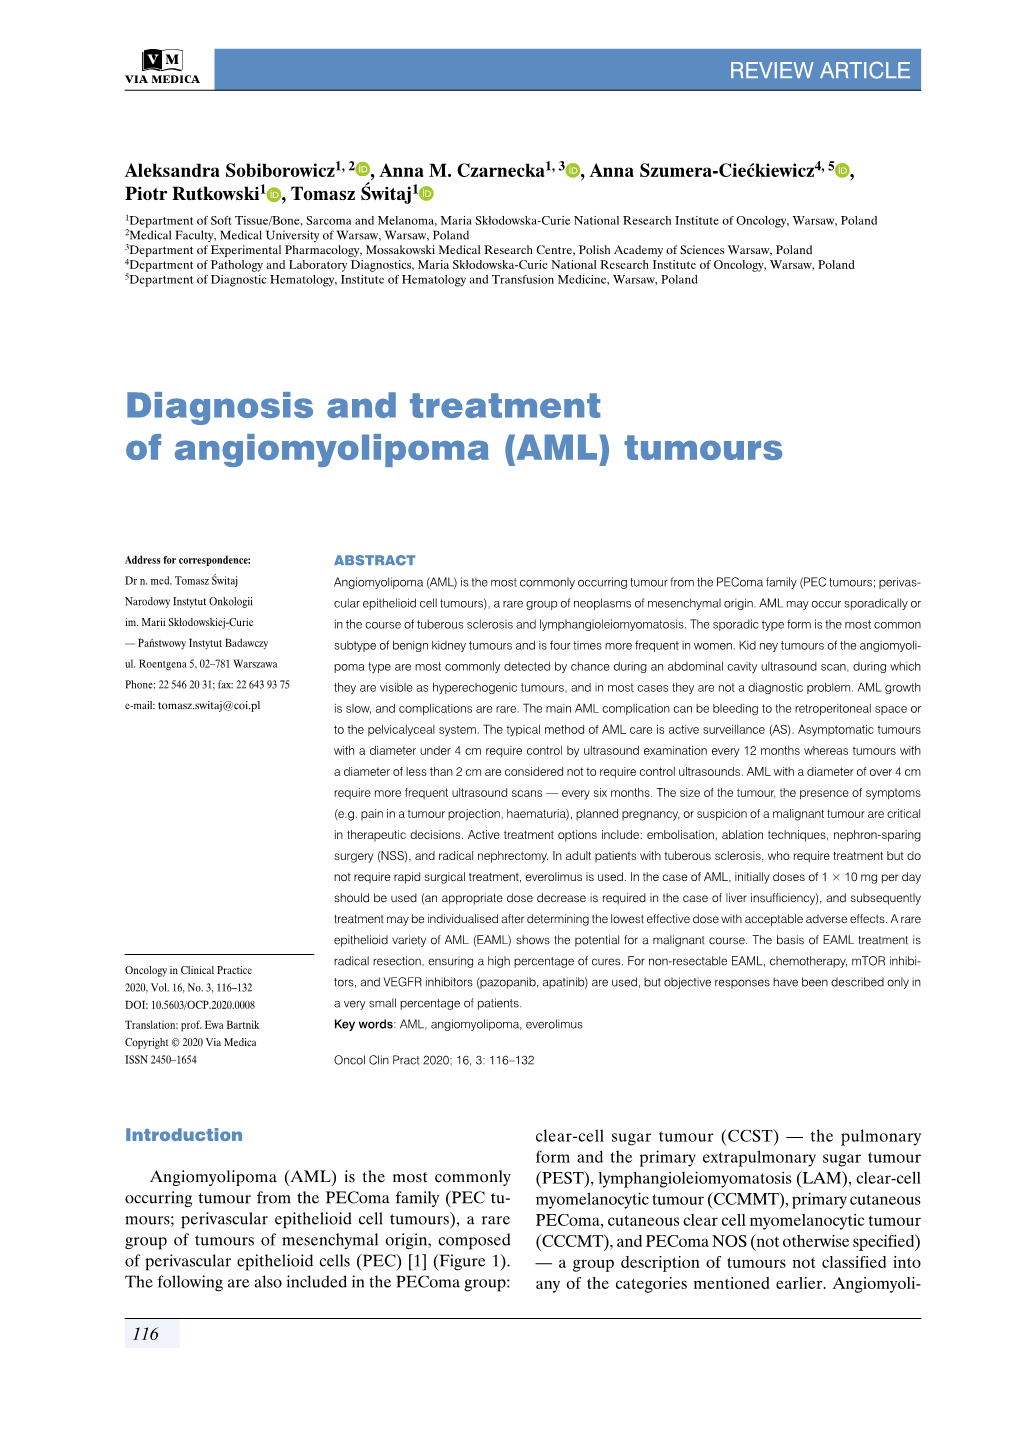 Diagnosis and Treatment of Angiomyolipoma (AML) Tumours